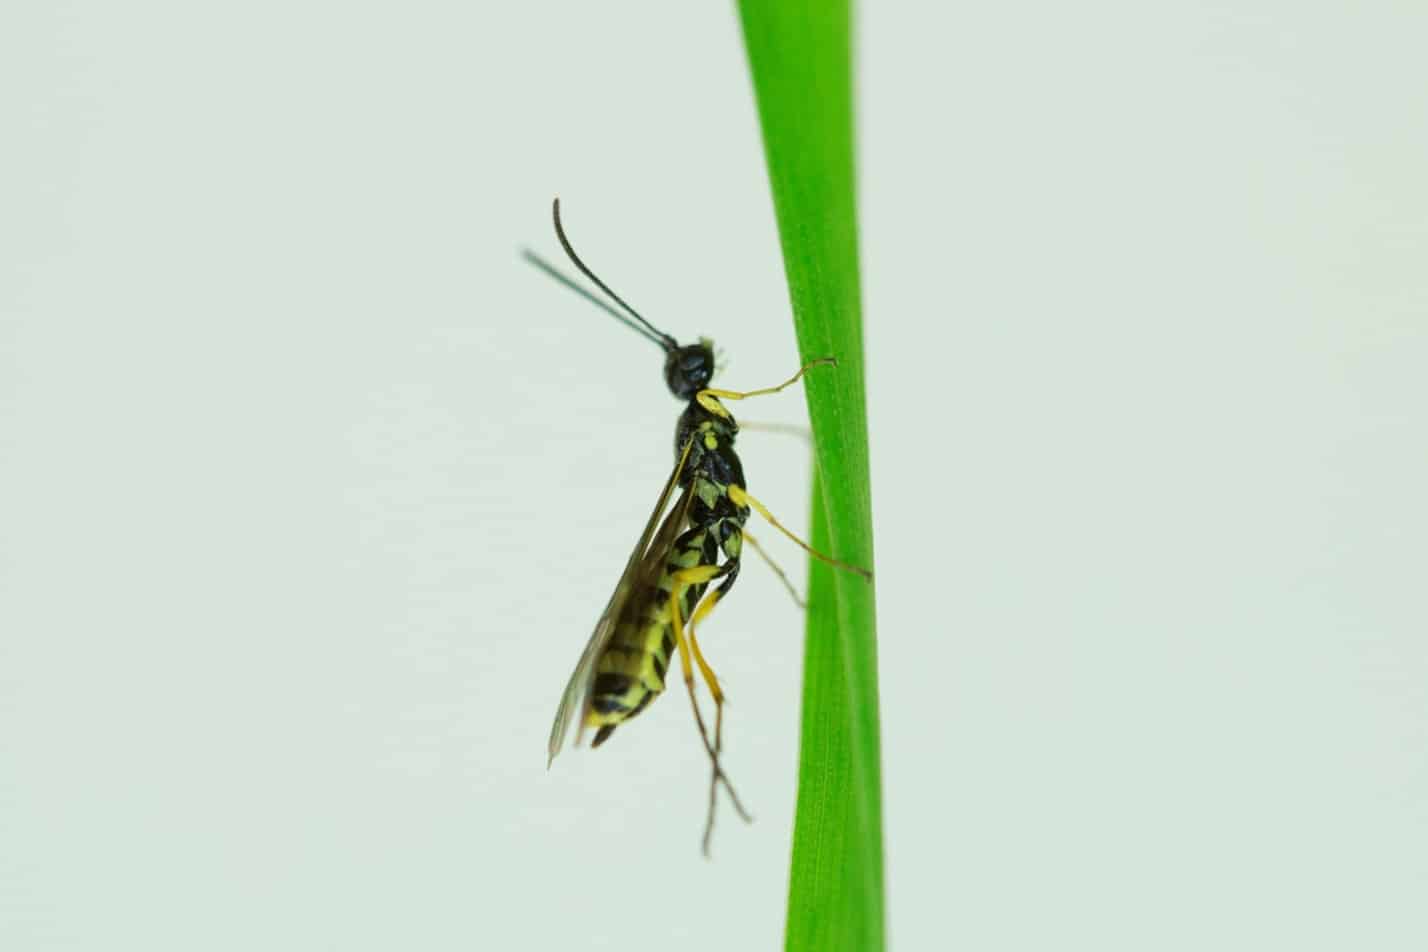 An adult sawfly